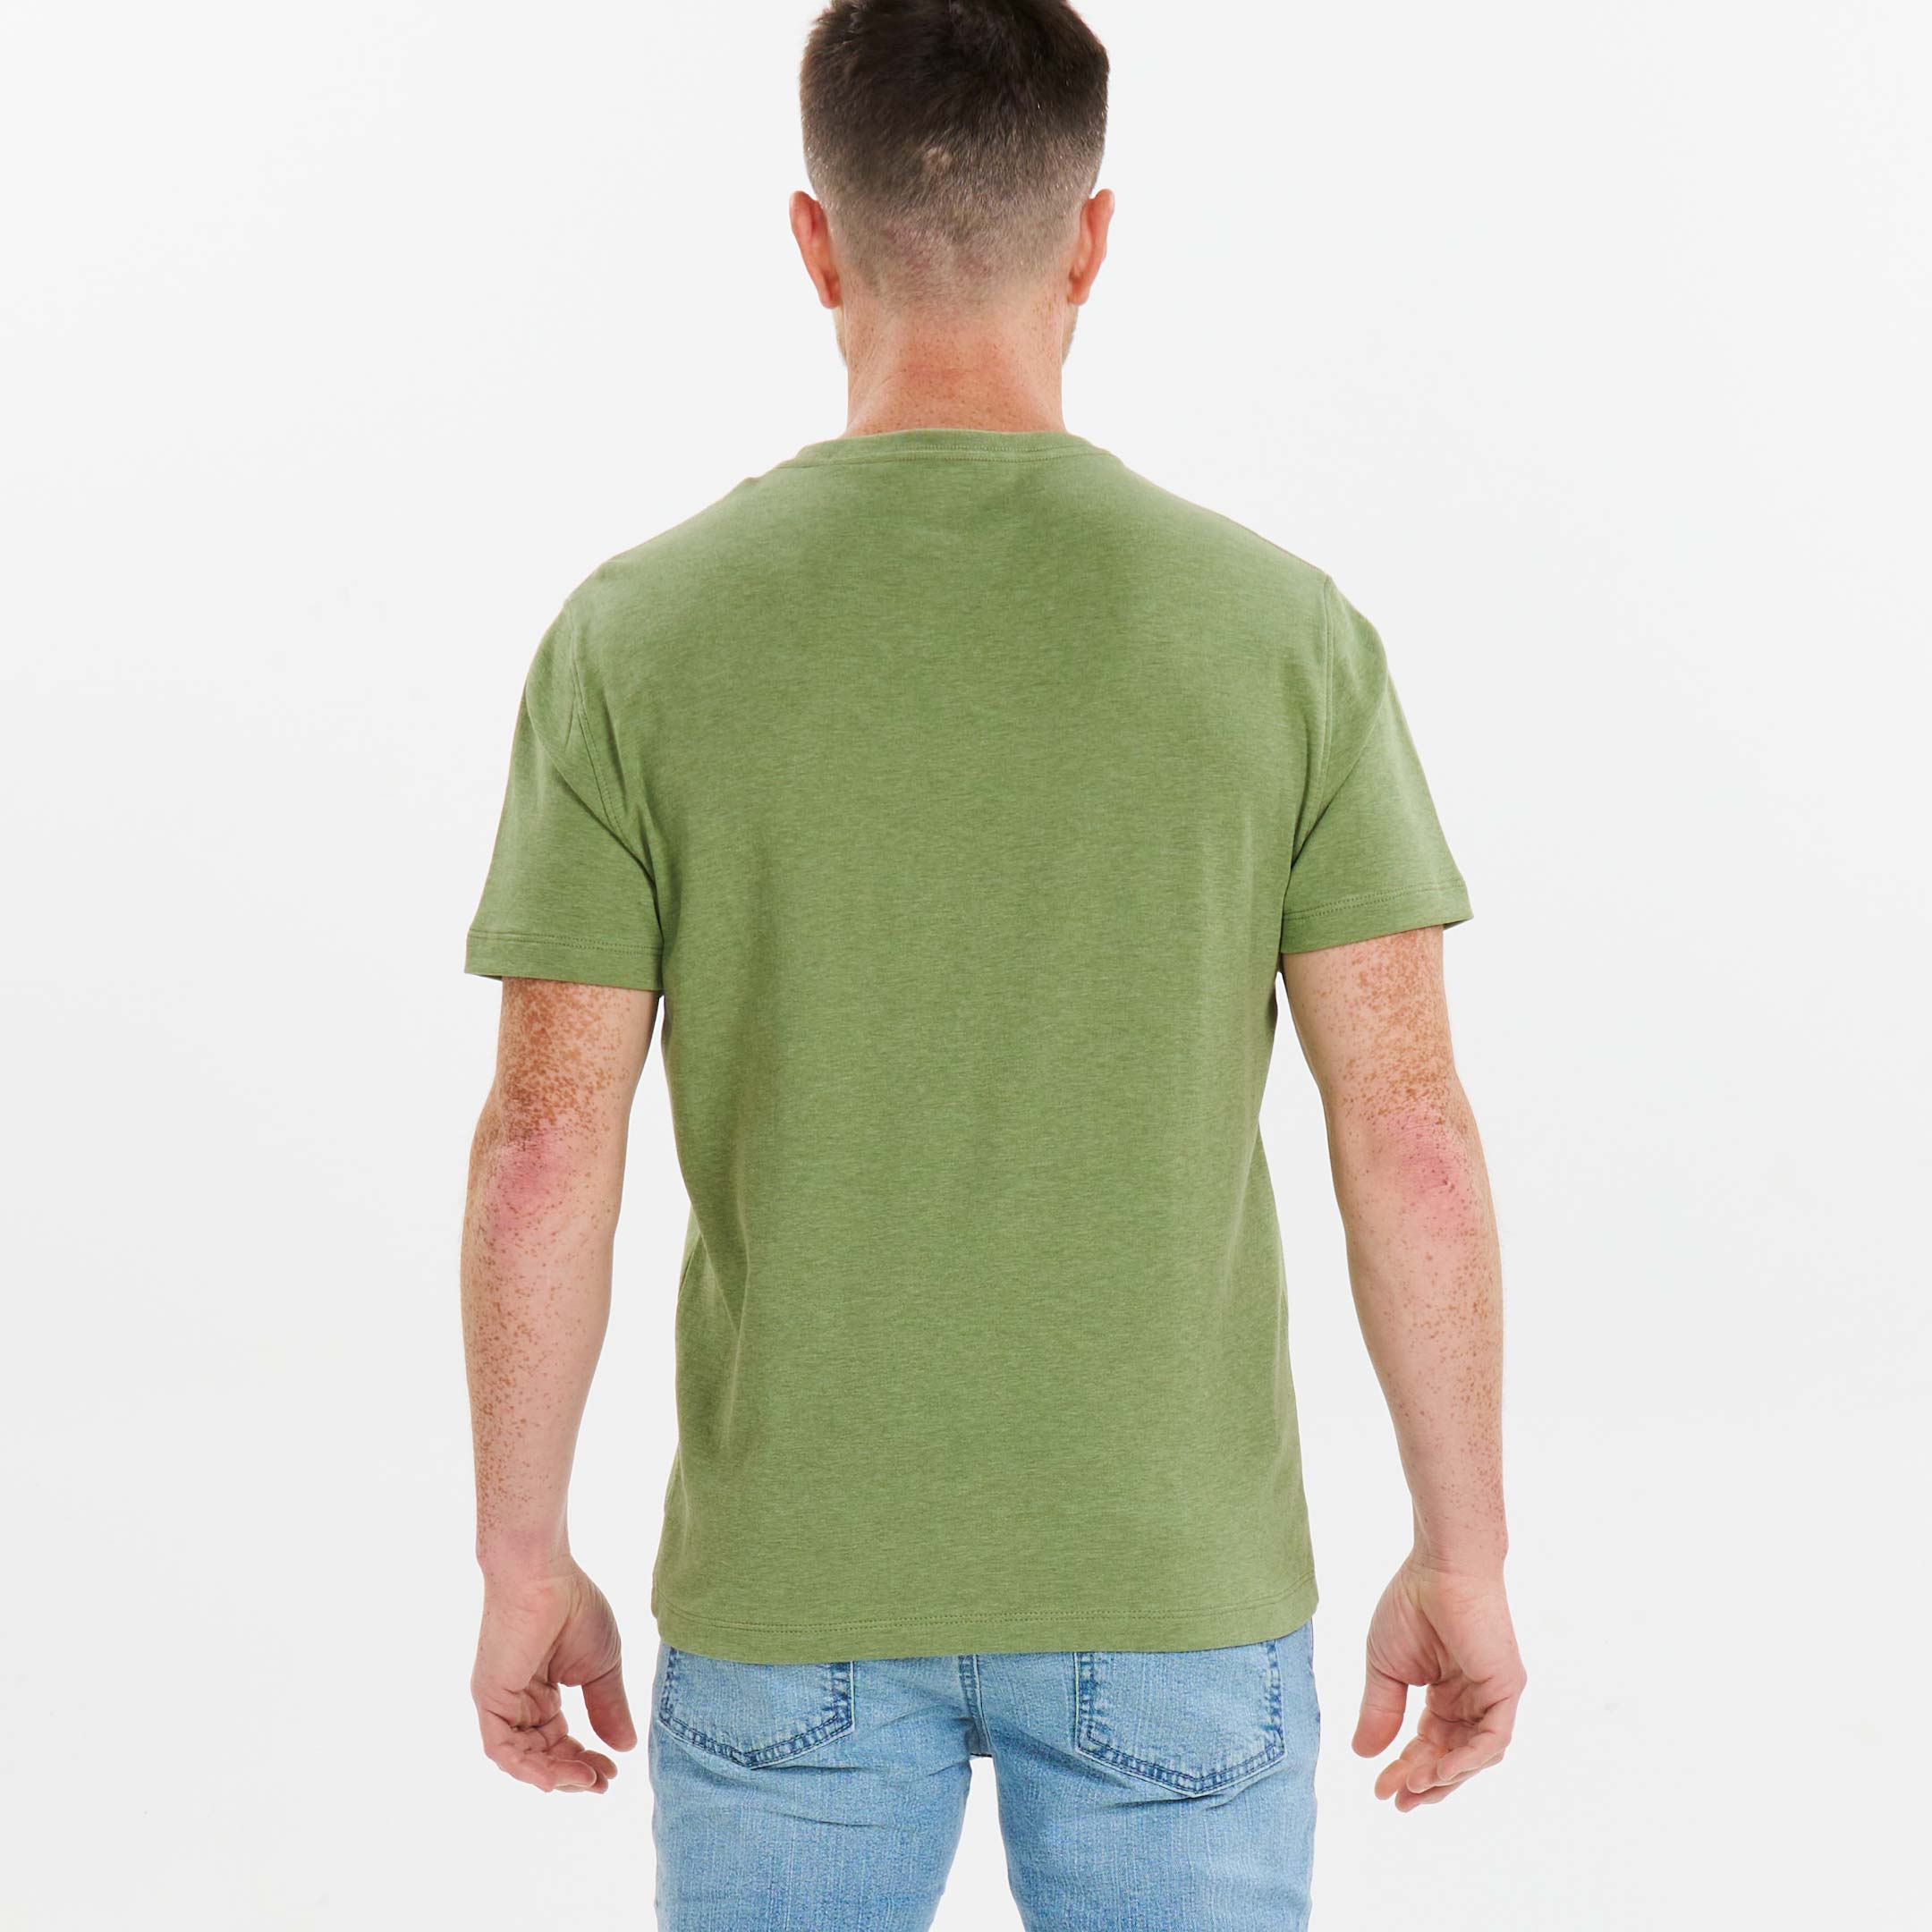 Ash & Erie Heather Green Luxury Soft Touch Crew Neck T-Shirt for Short Men   Short Sleeve Premium Tee